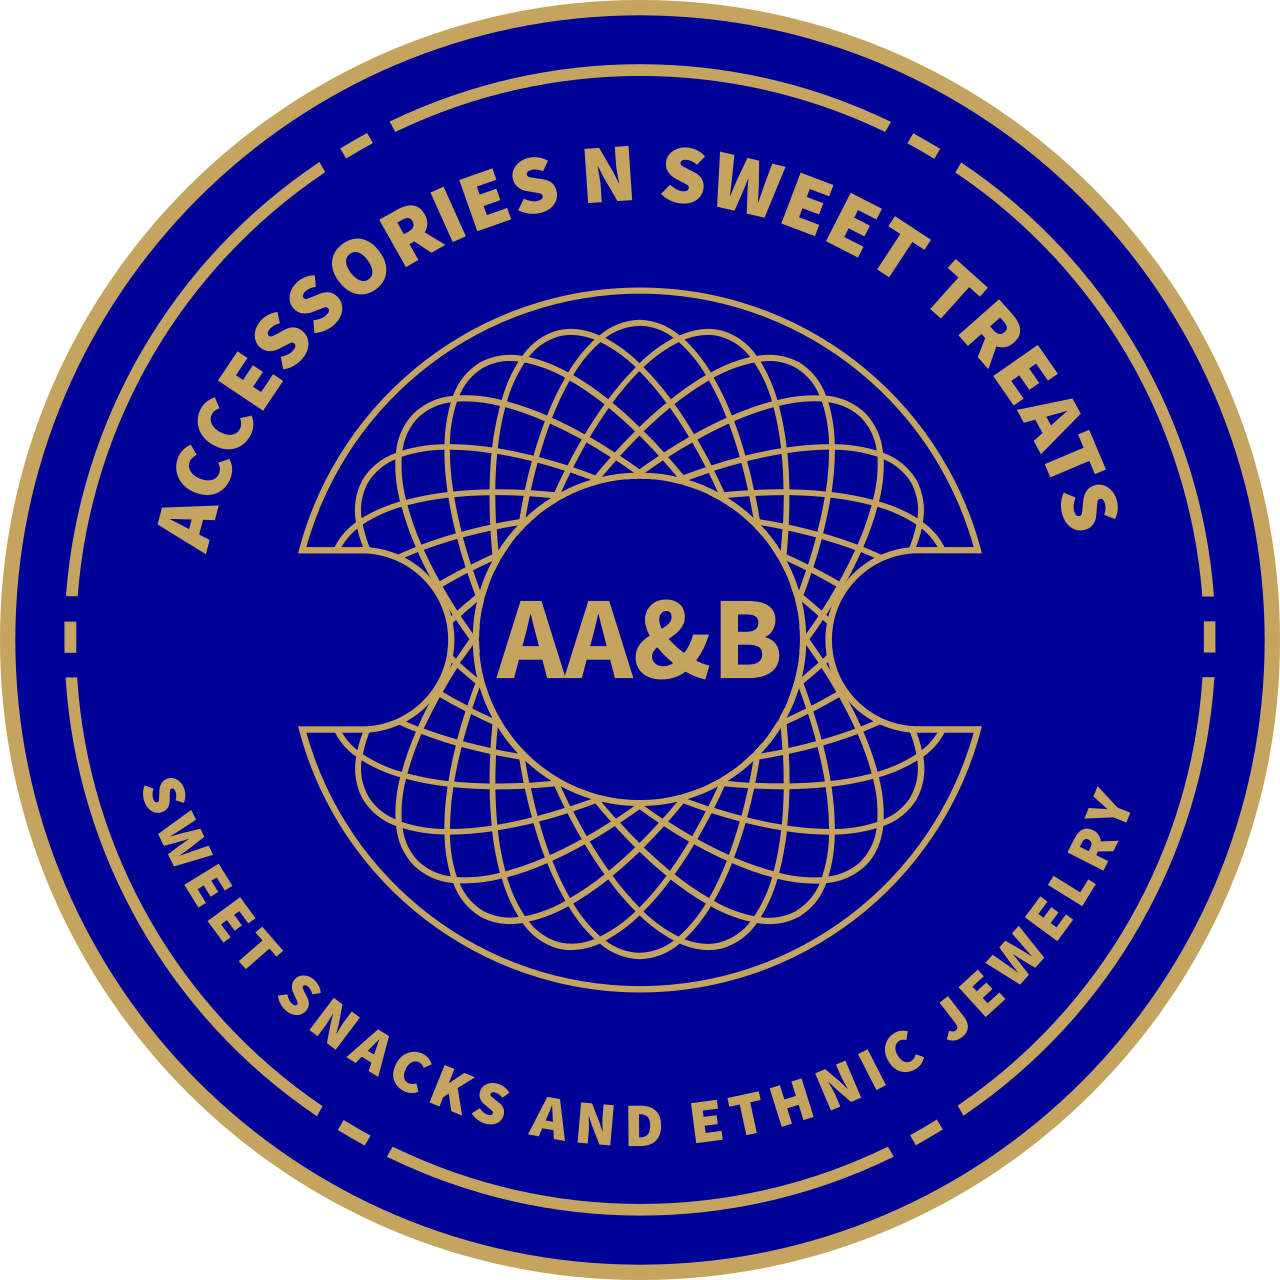 AA&B Accessories n Sweet Treats 's logo